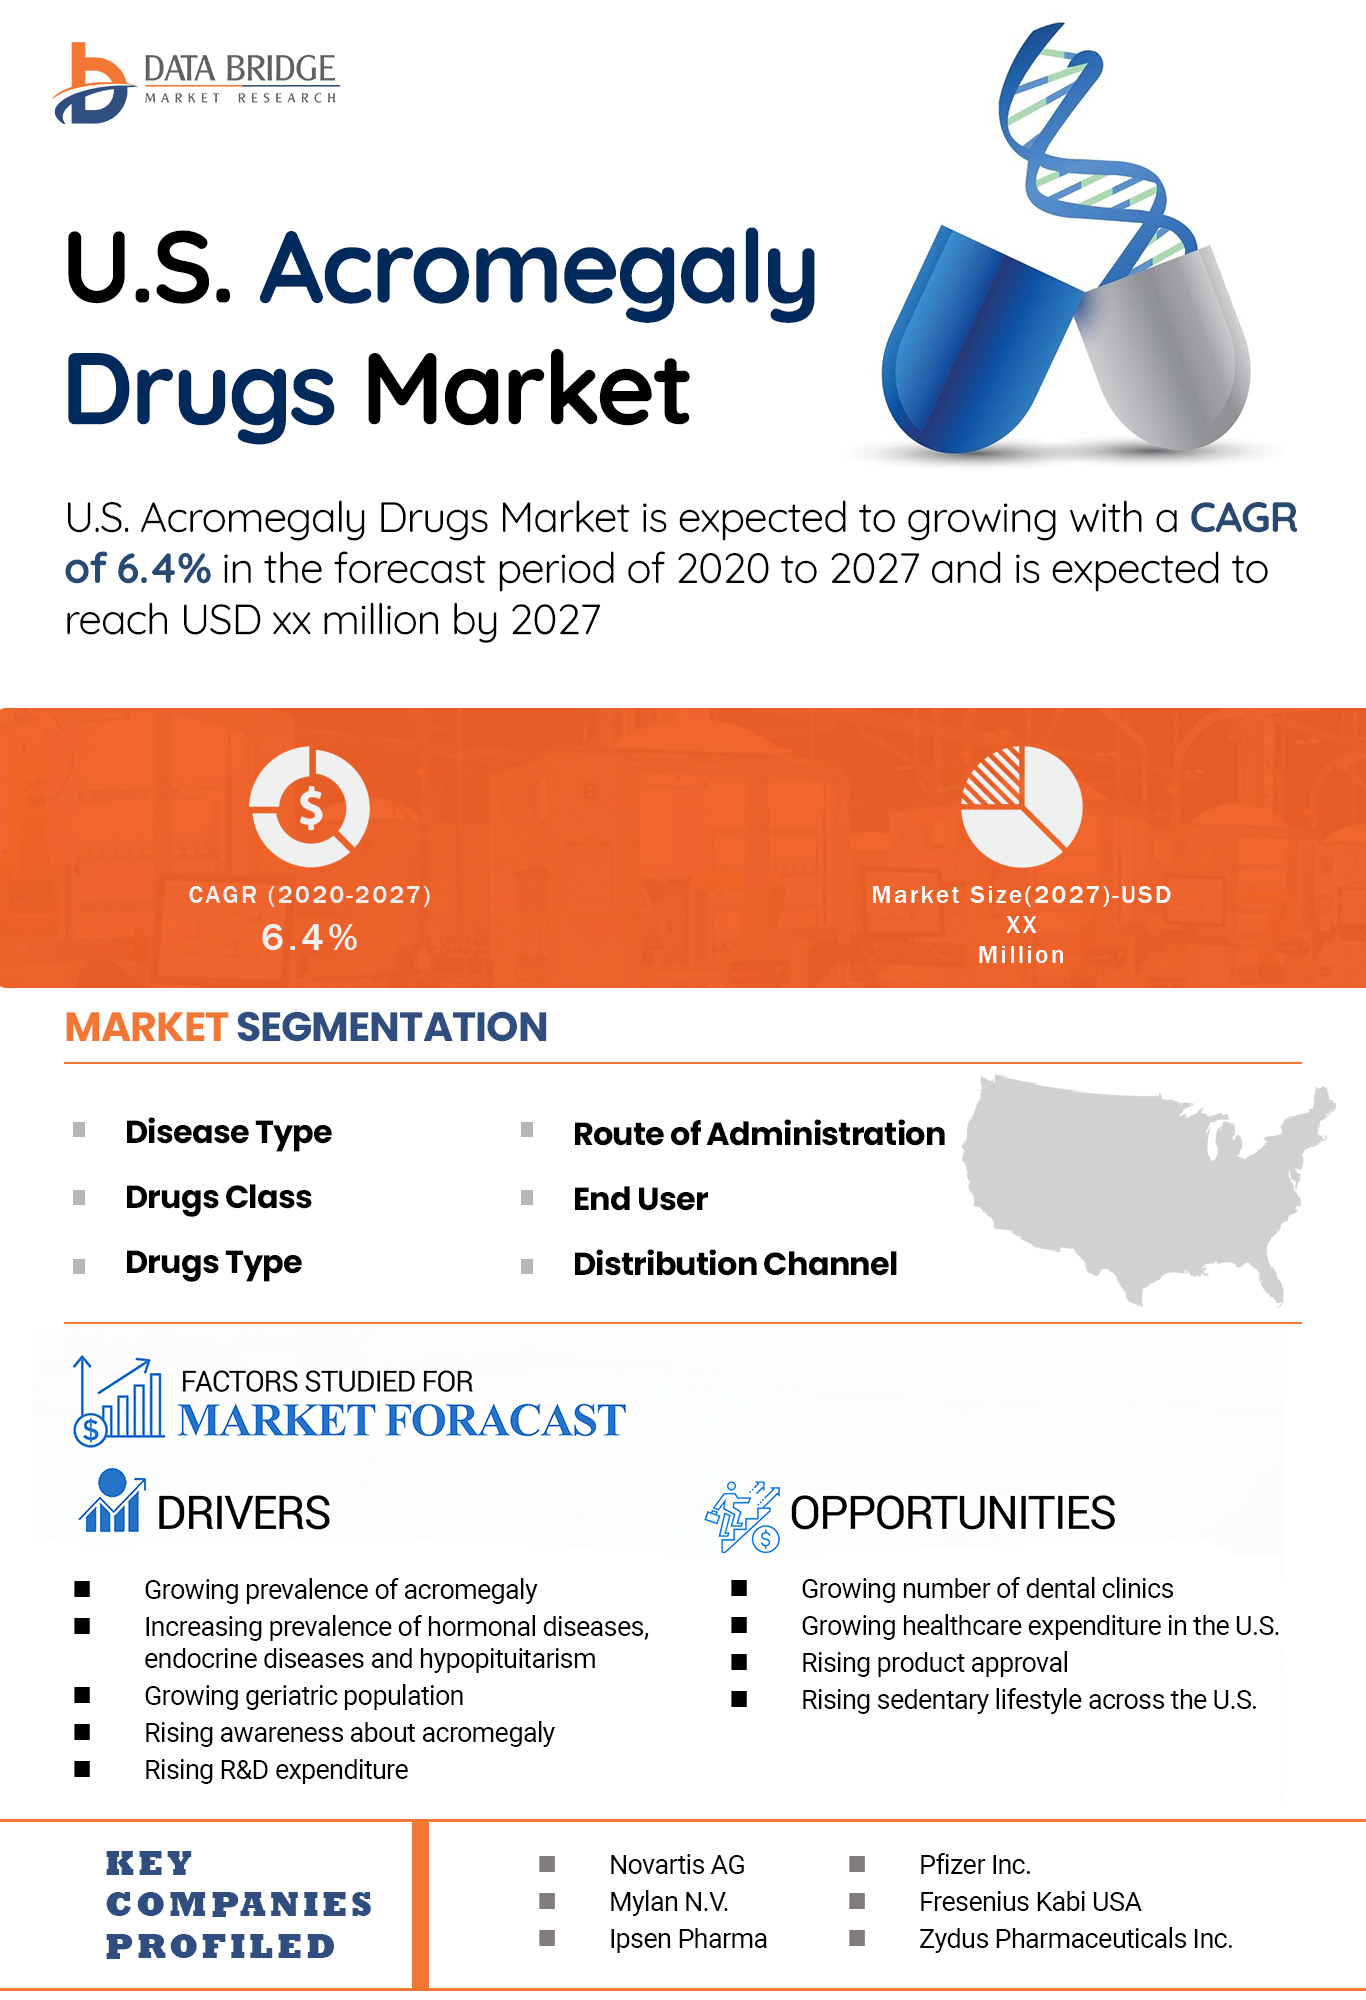 U.S. Acromegaly Drugs Market